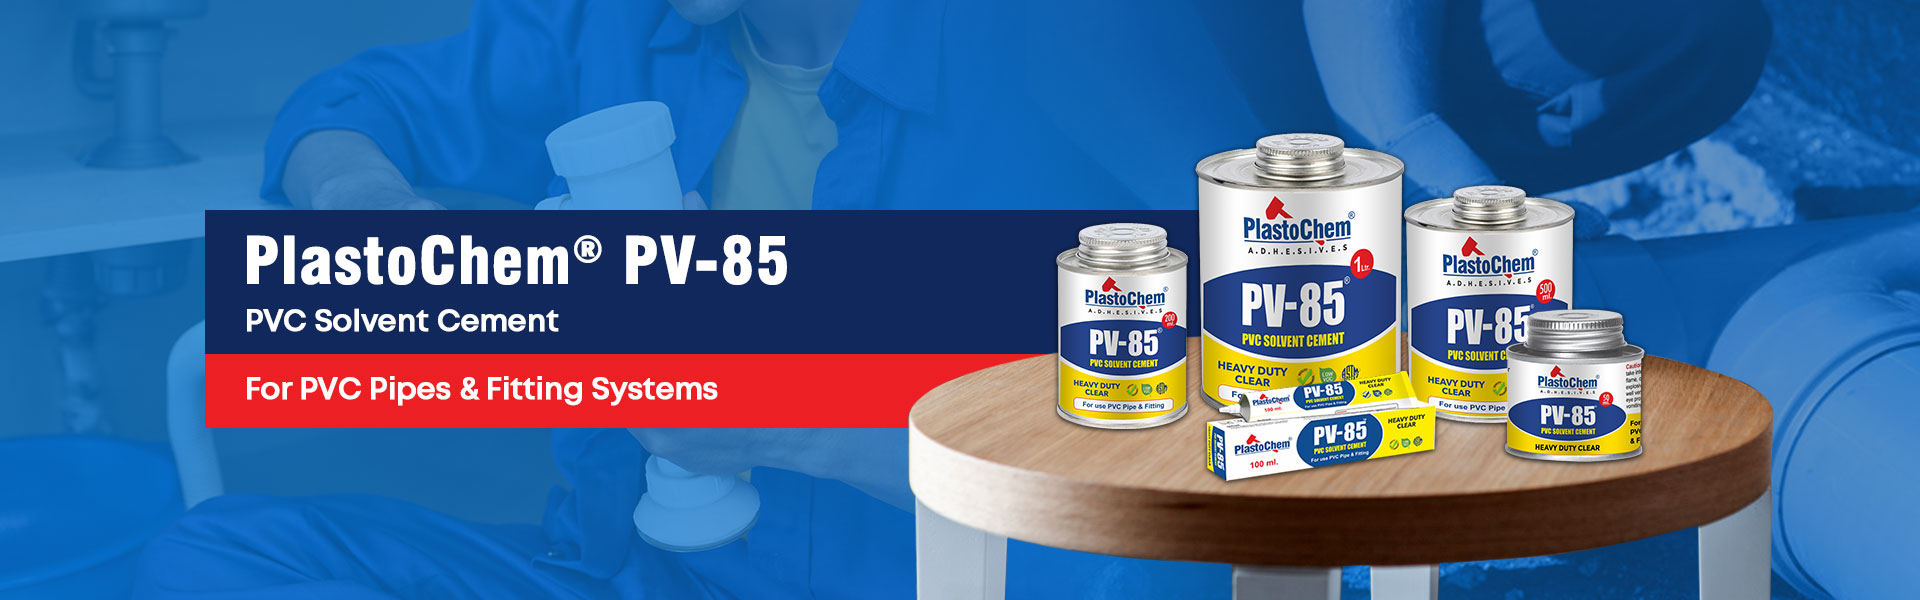 Plastochem PV-85 pvc solvent cement